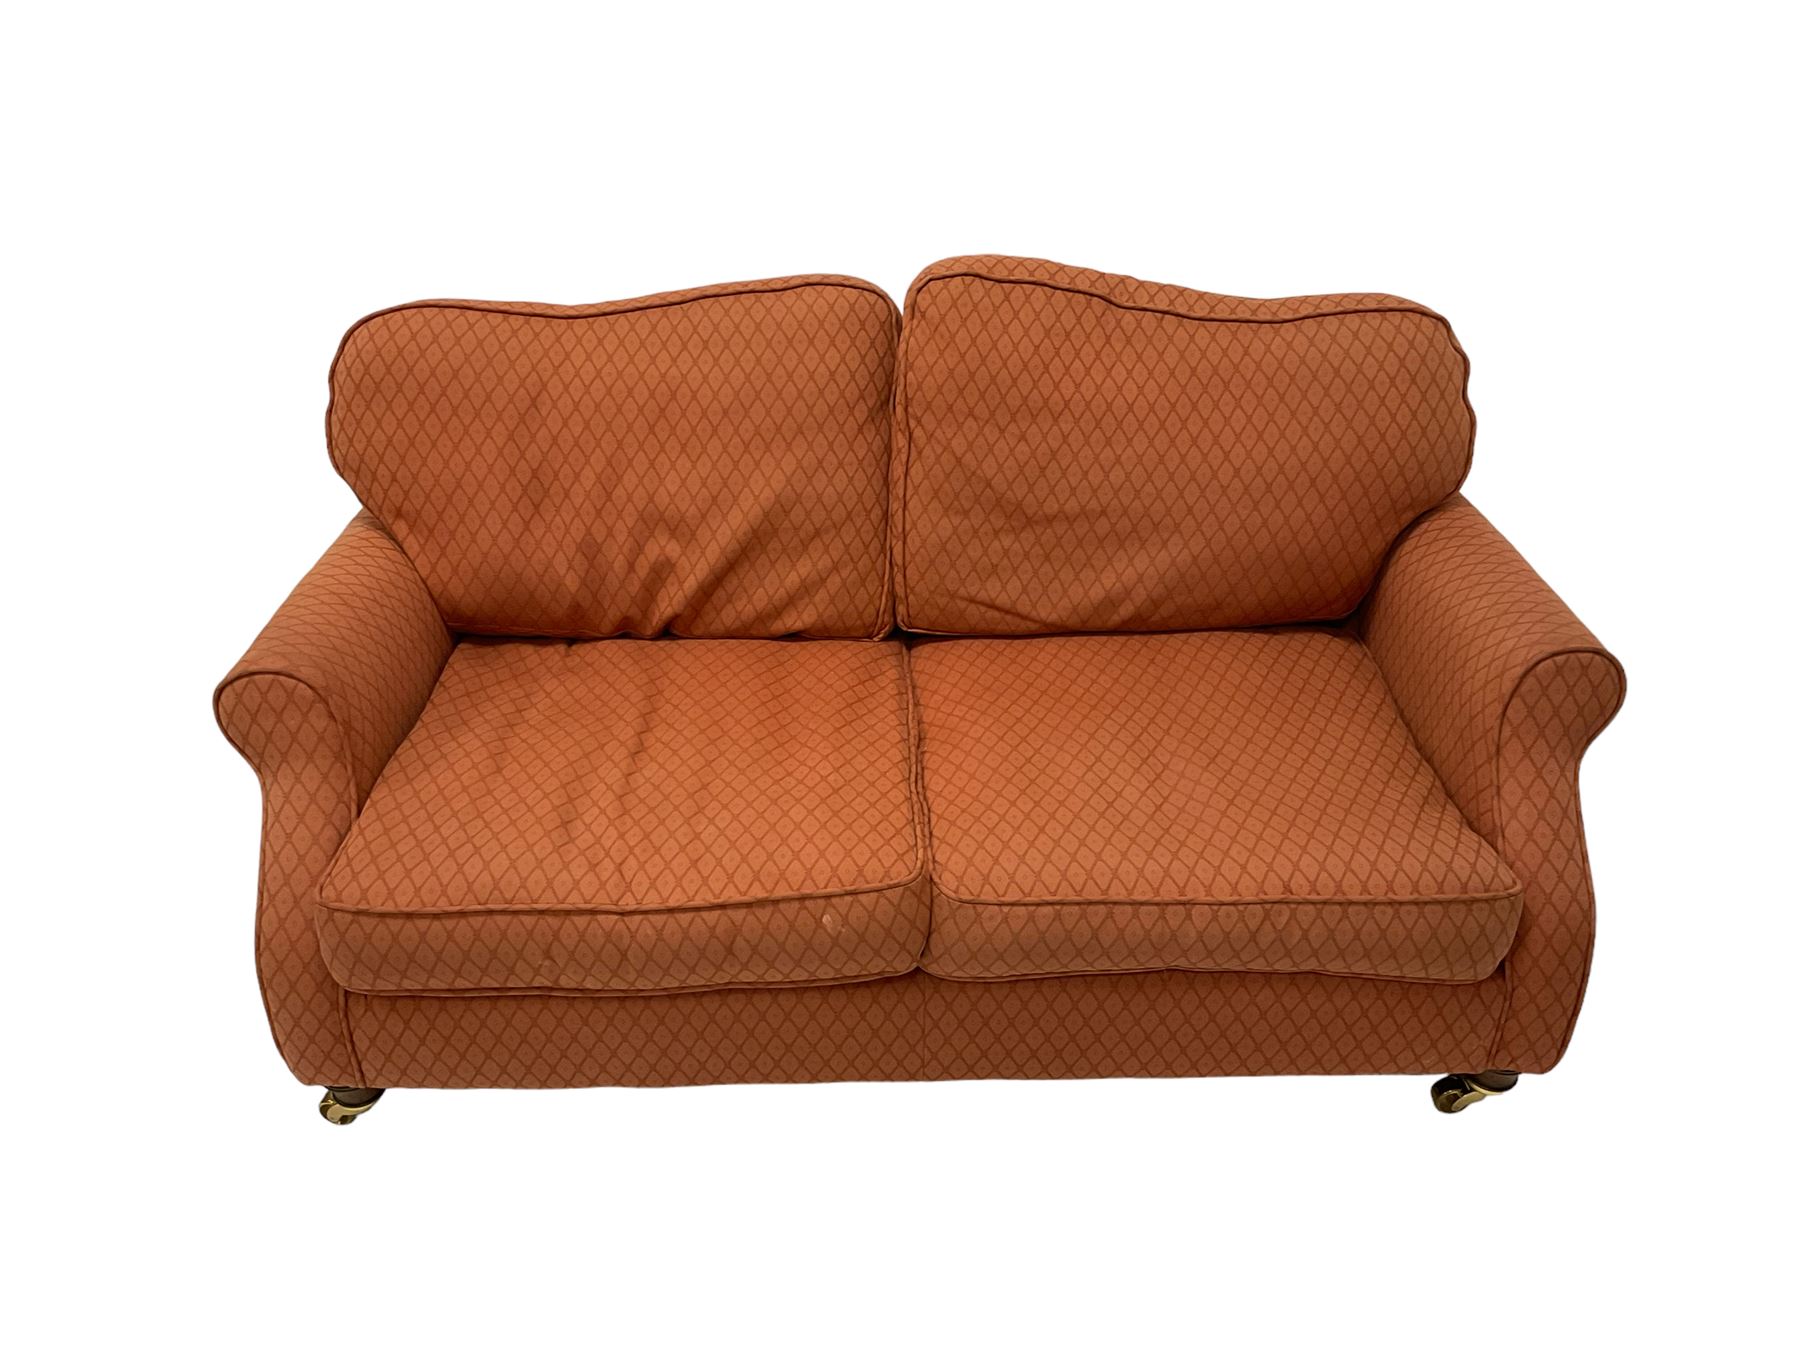 Traditional three seat sofa - Image 4 of 8